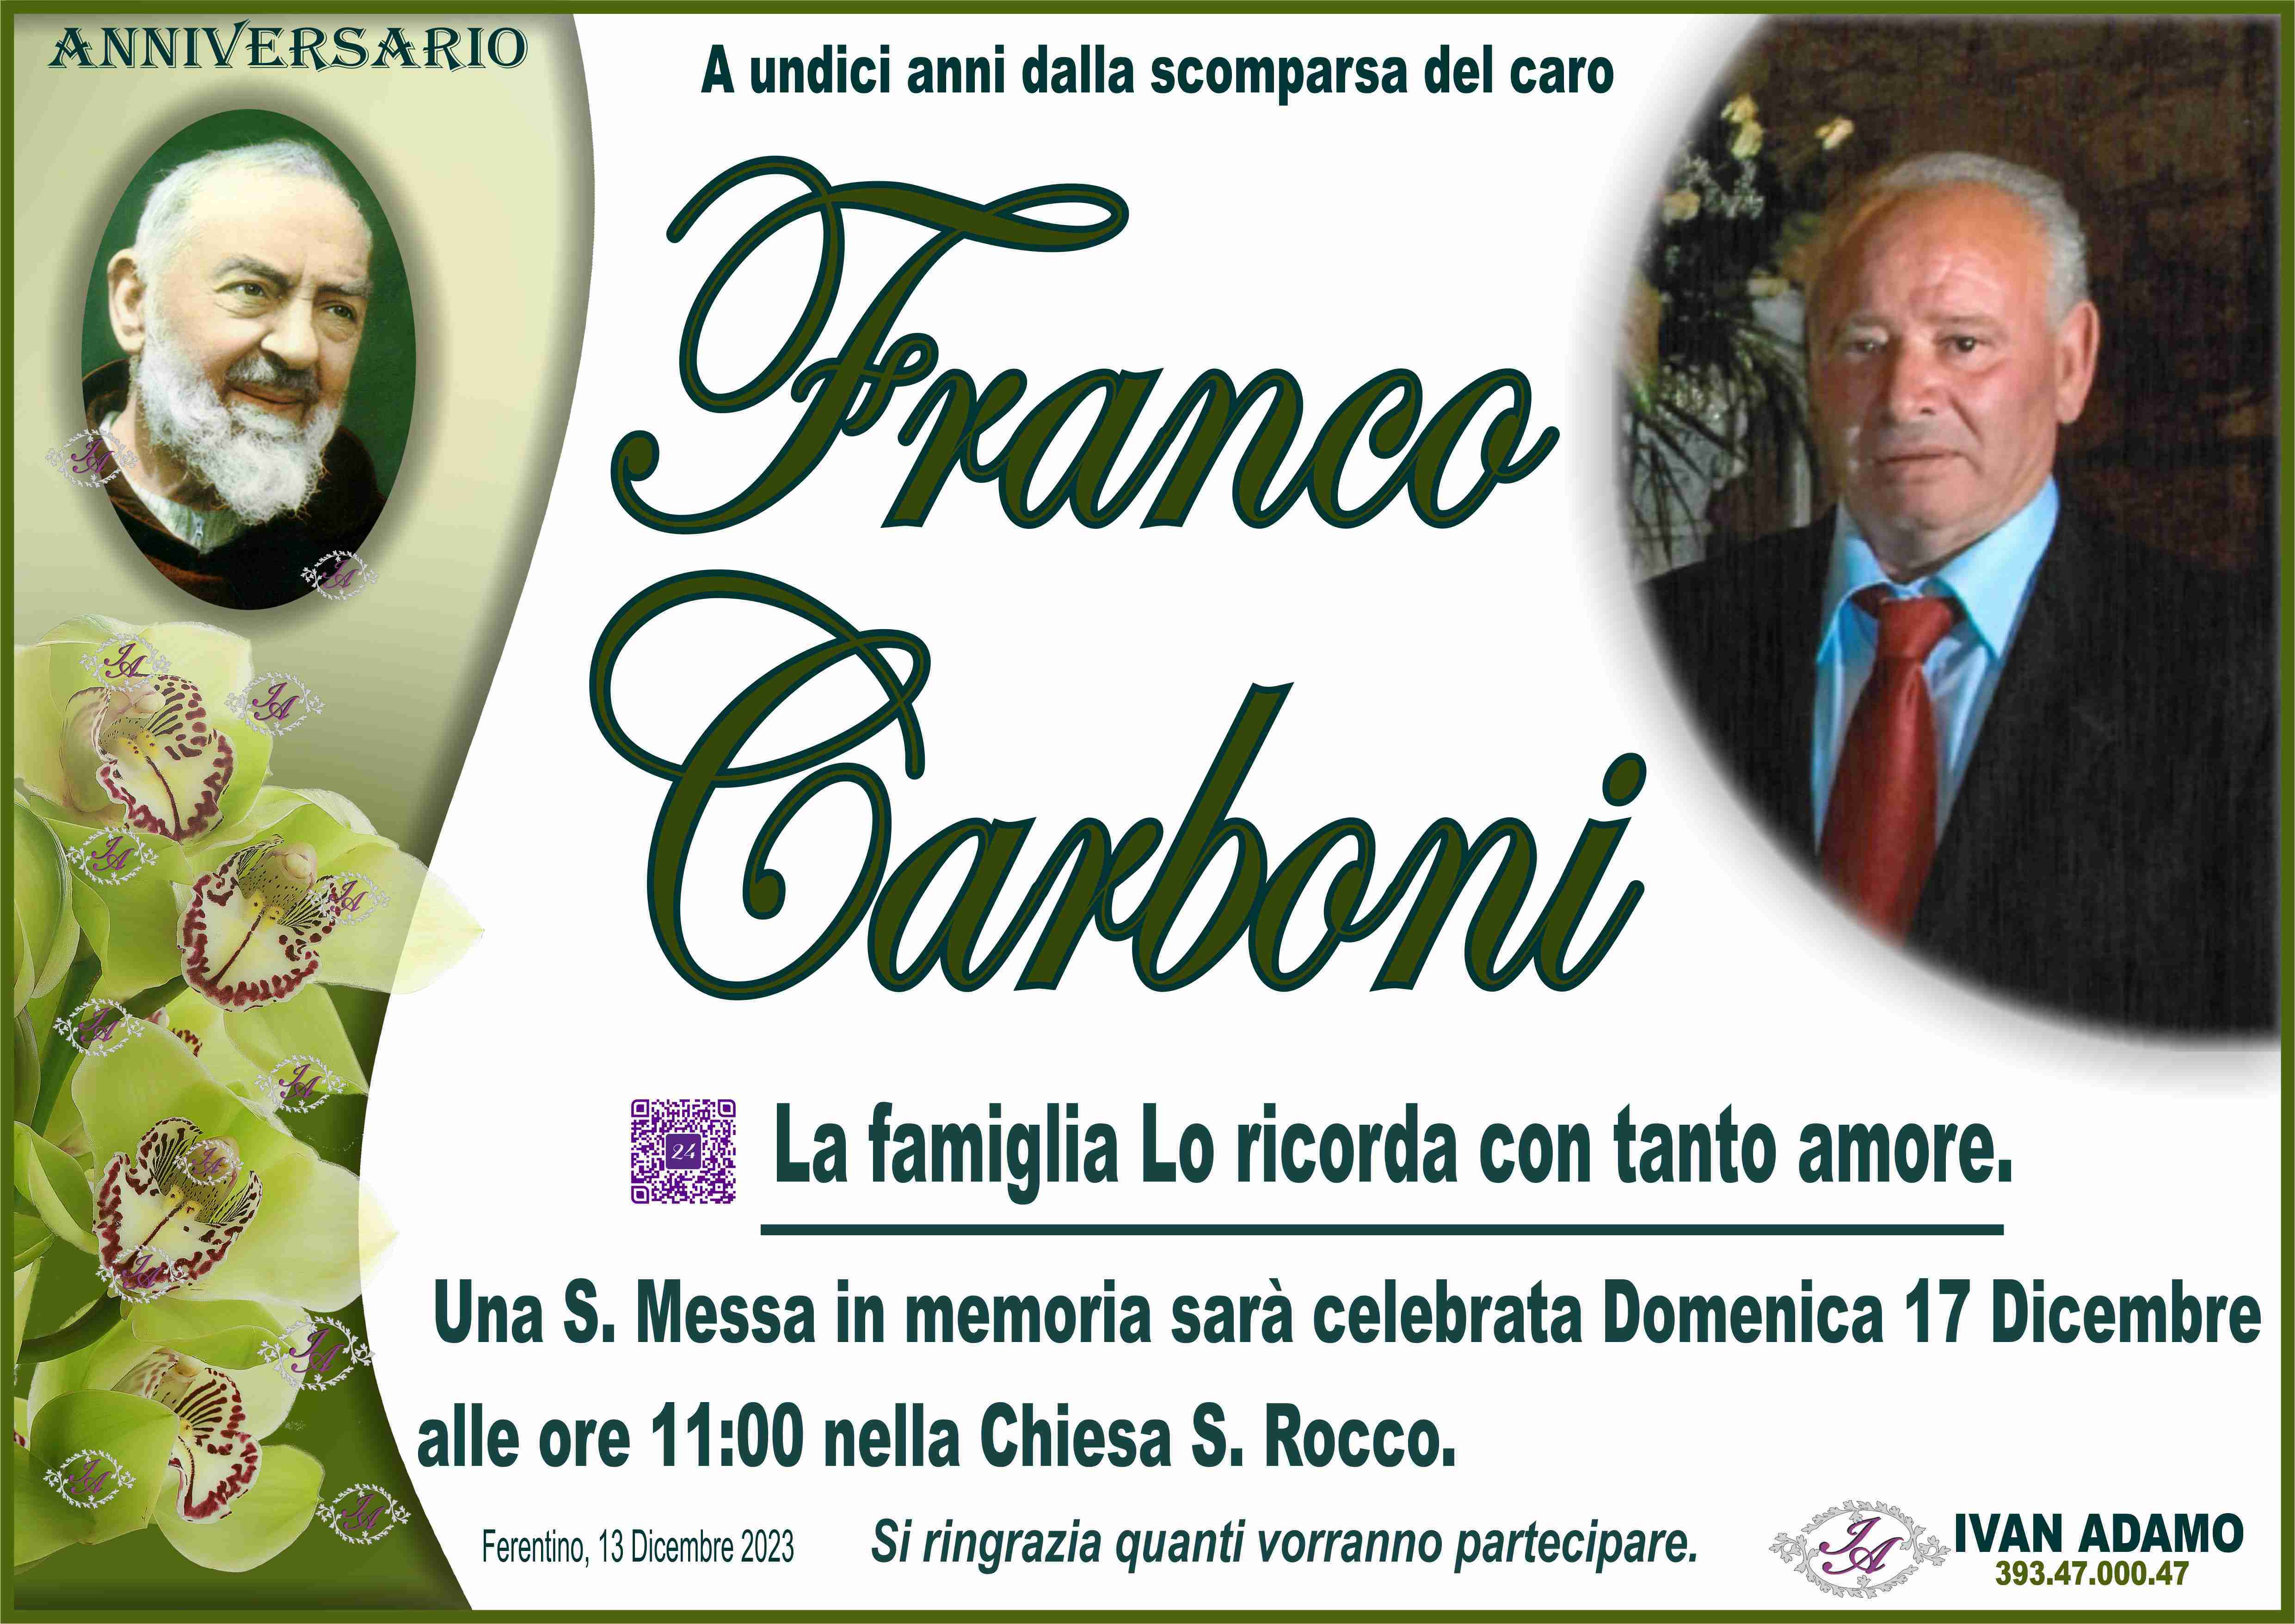 Franco Carboni